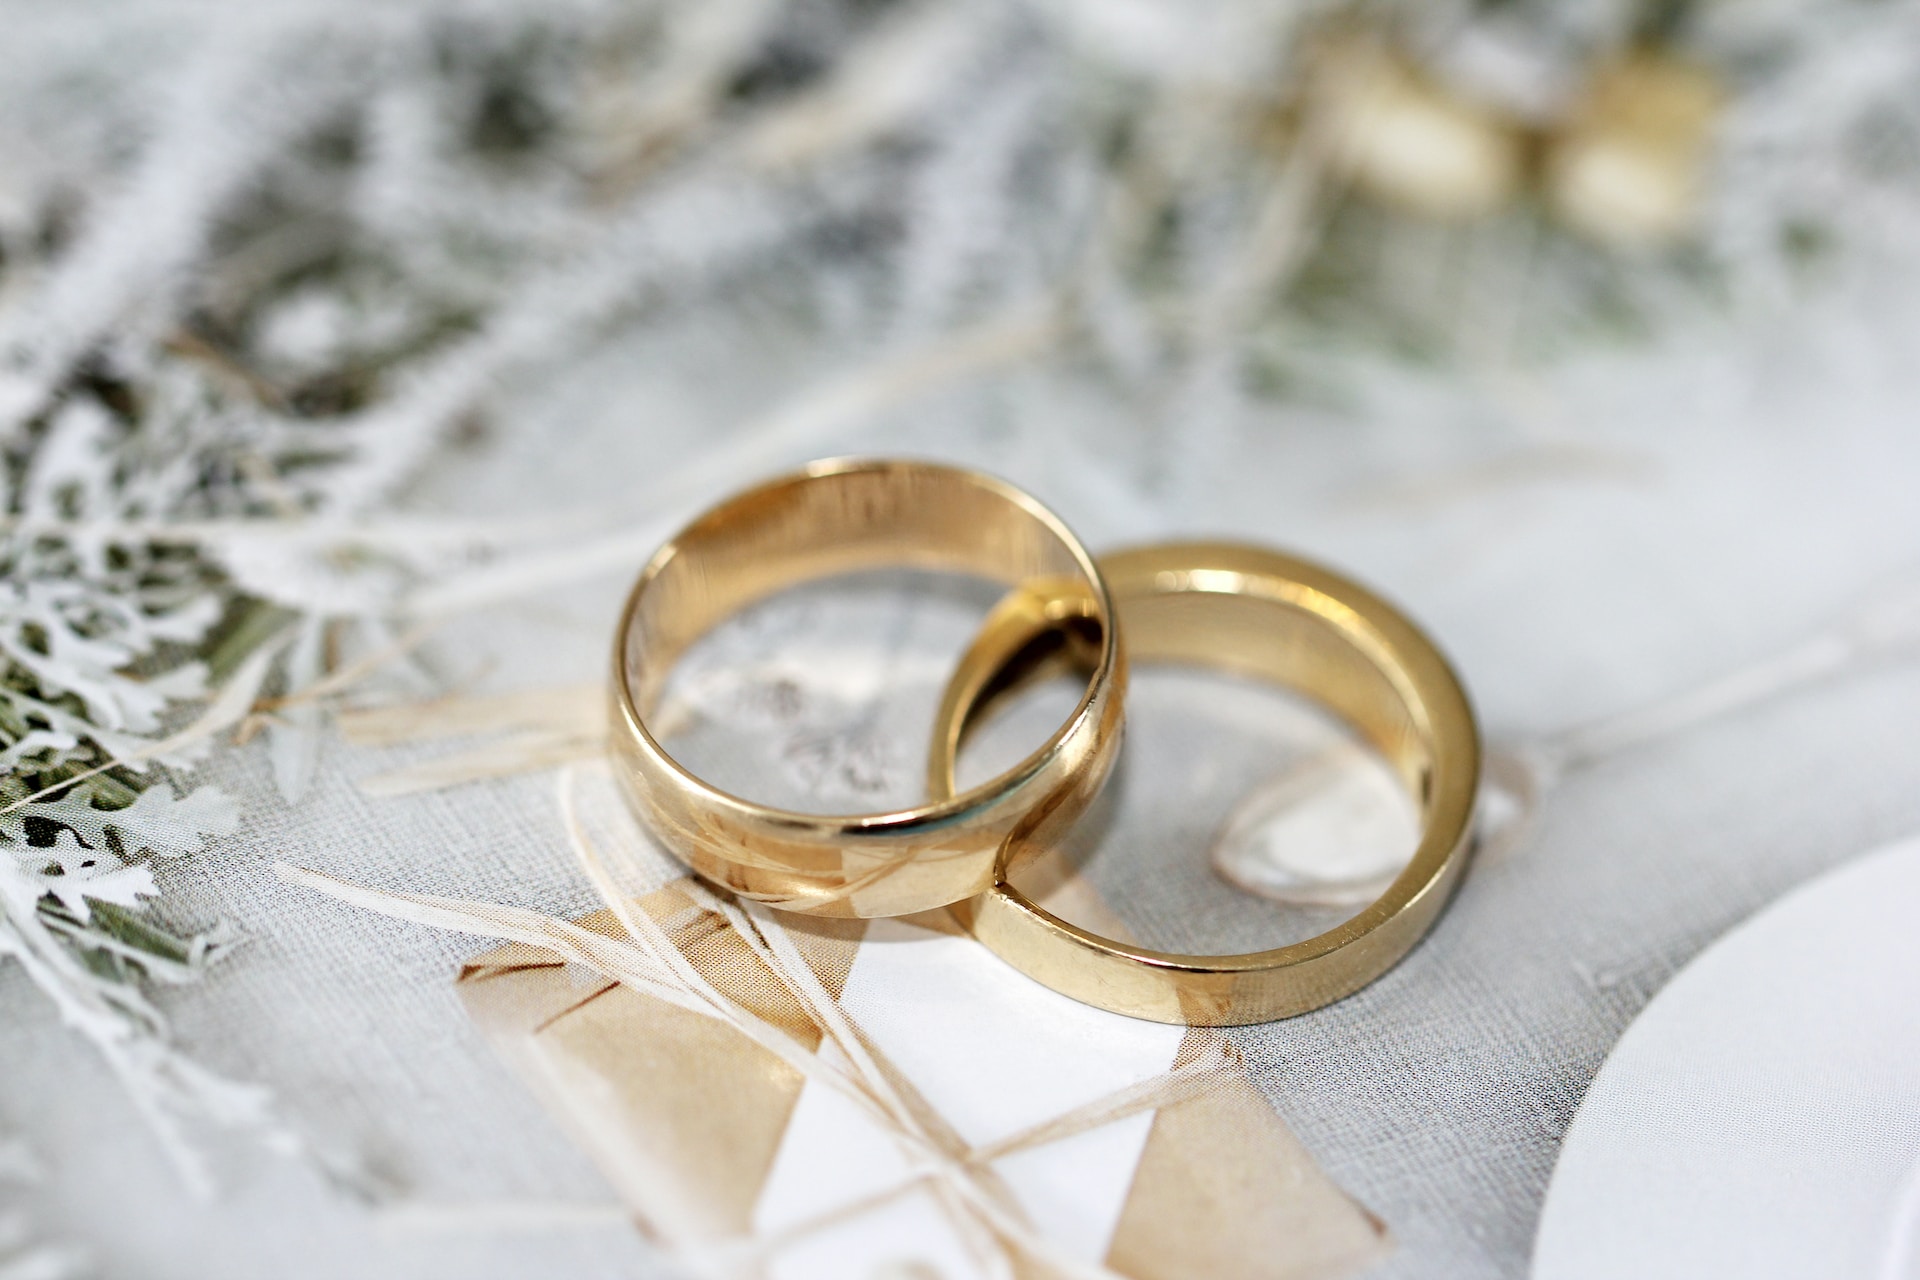 christian marriage ceremony symbolism